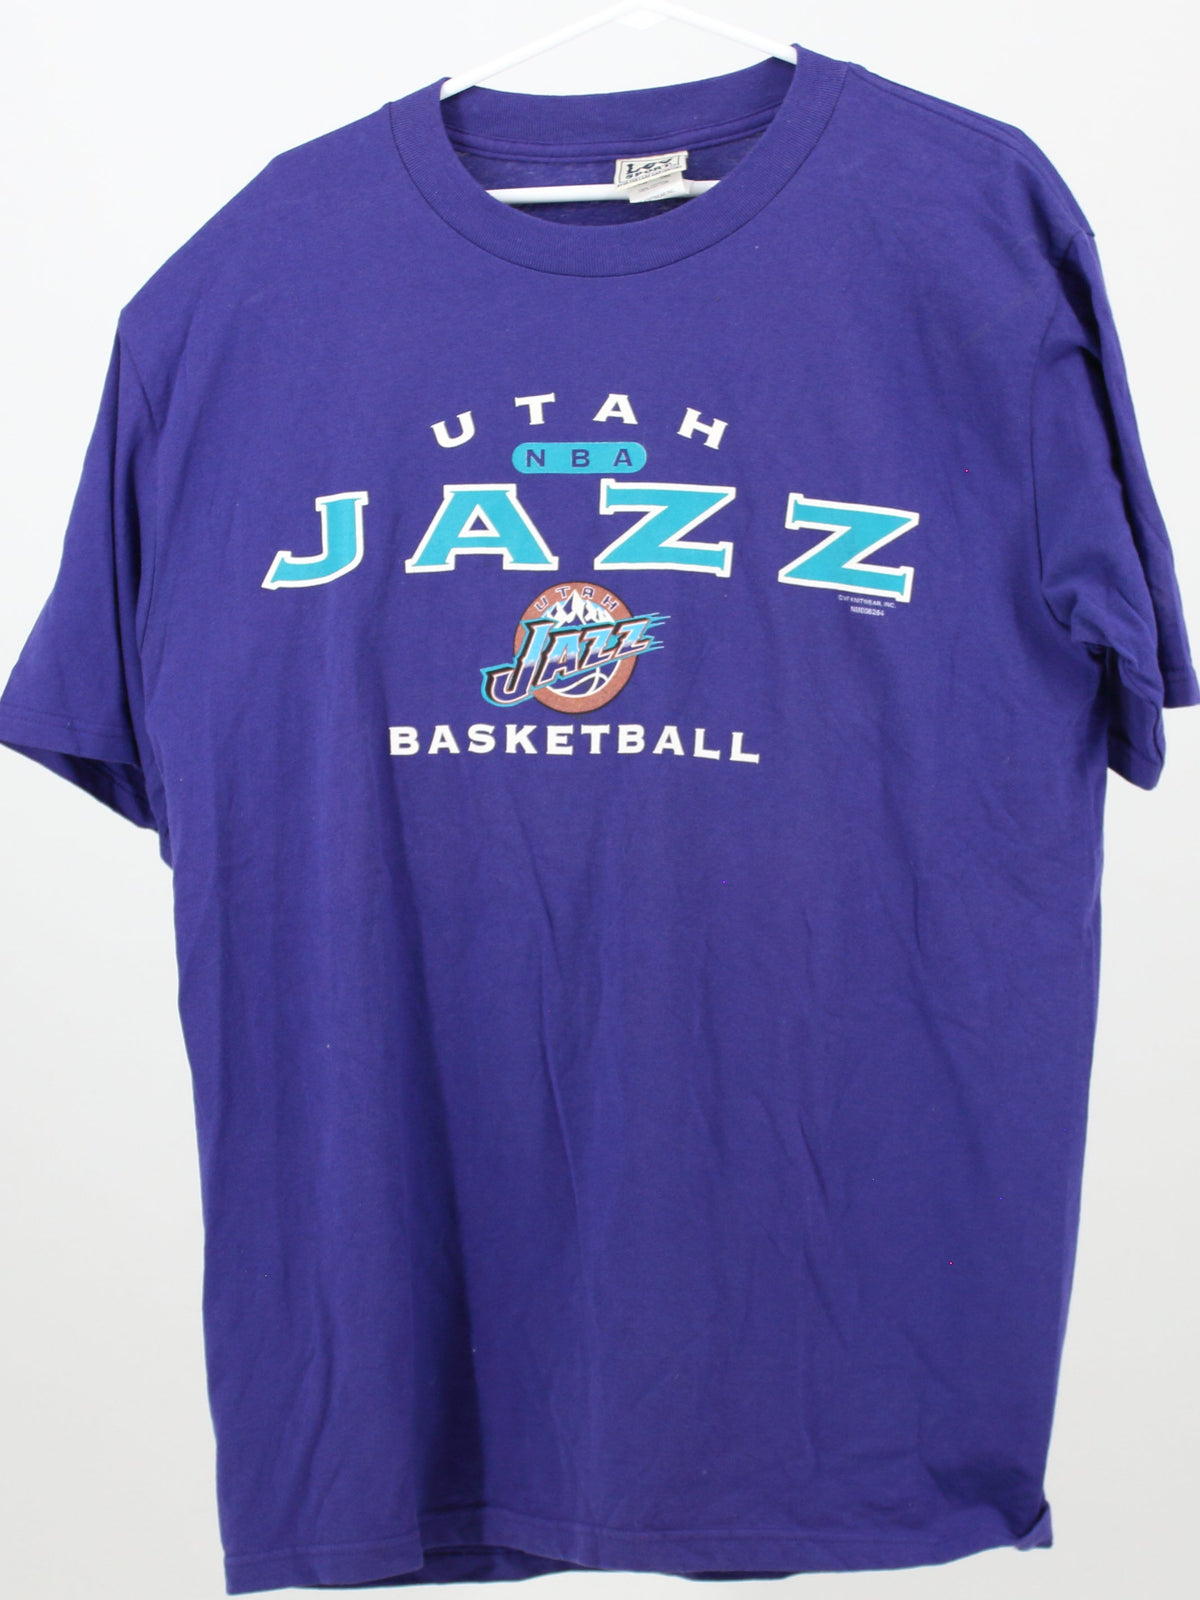 Utah NBA Jazz Basketball Tee